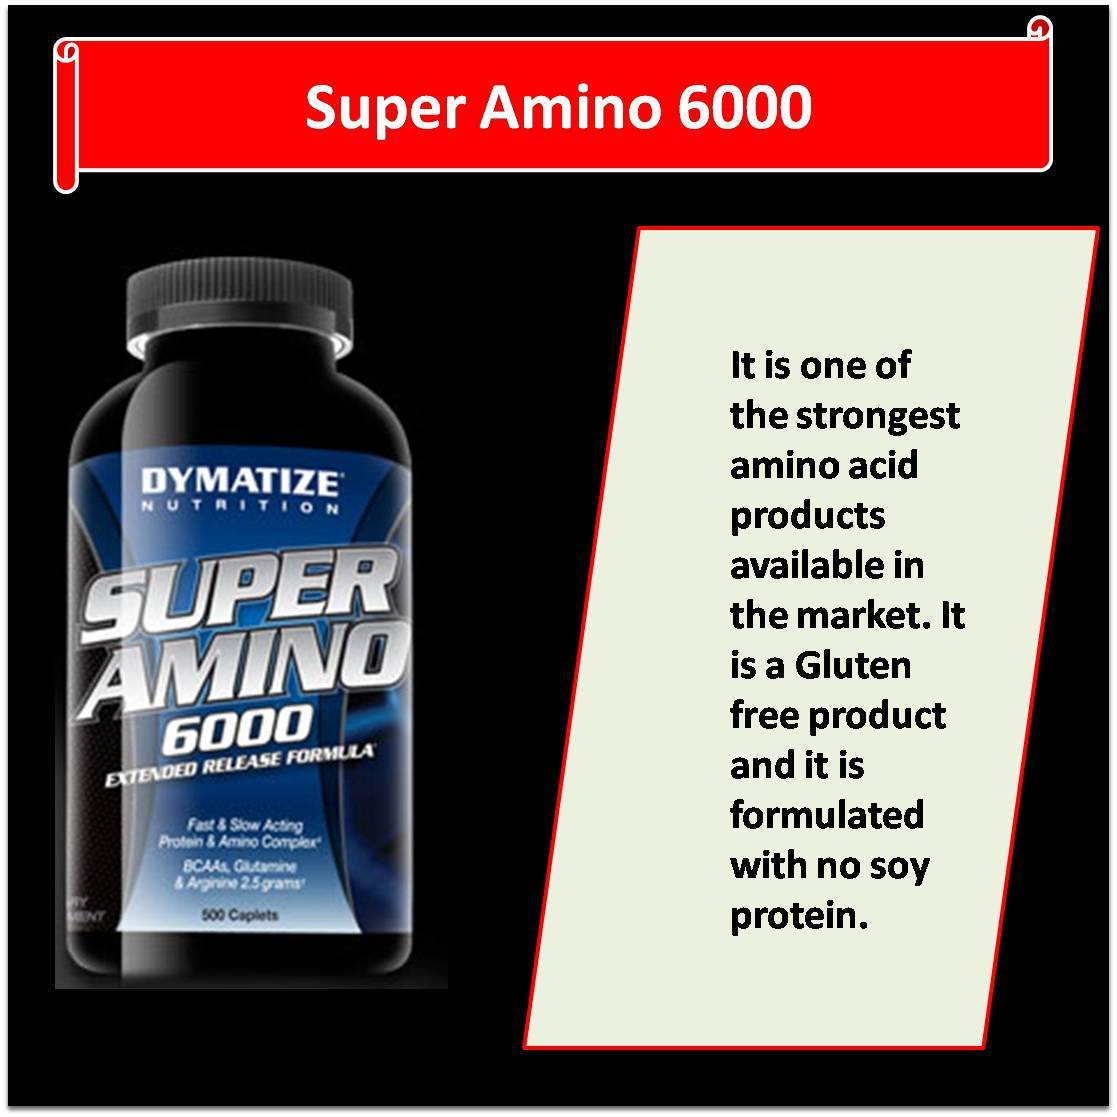 Super Amino 6000 от Dymatize